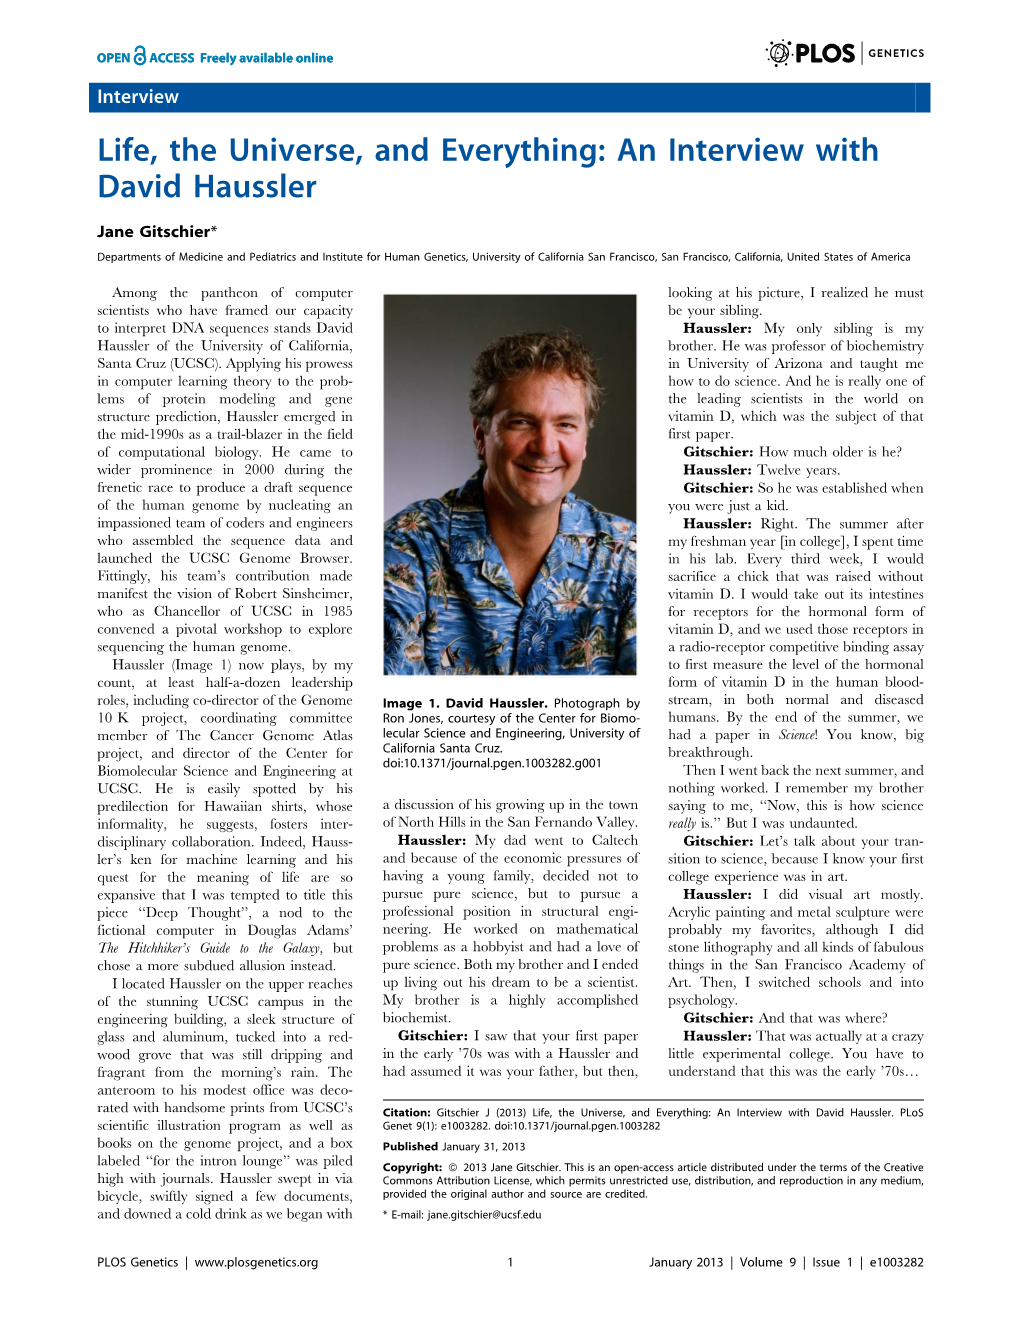 An Interview with David Haussler